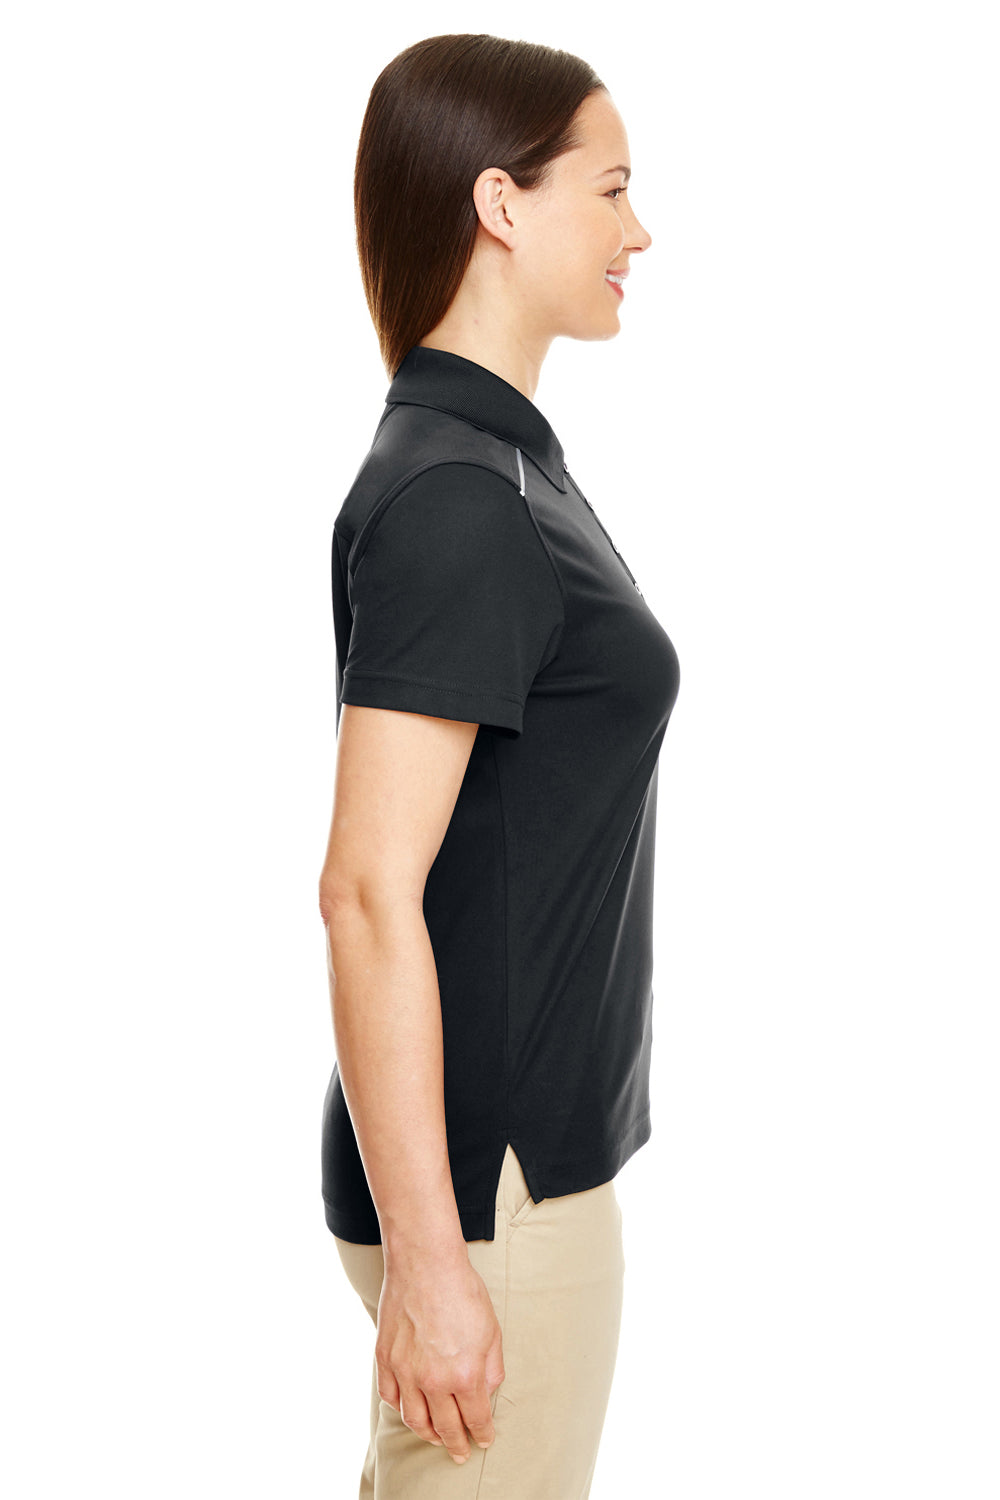 Core 365 78181R Womens Radiant Performance Moisture Wicking Short Sleeve Polo Shirt Black Side